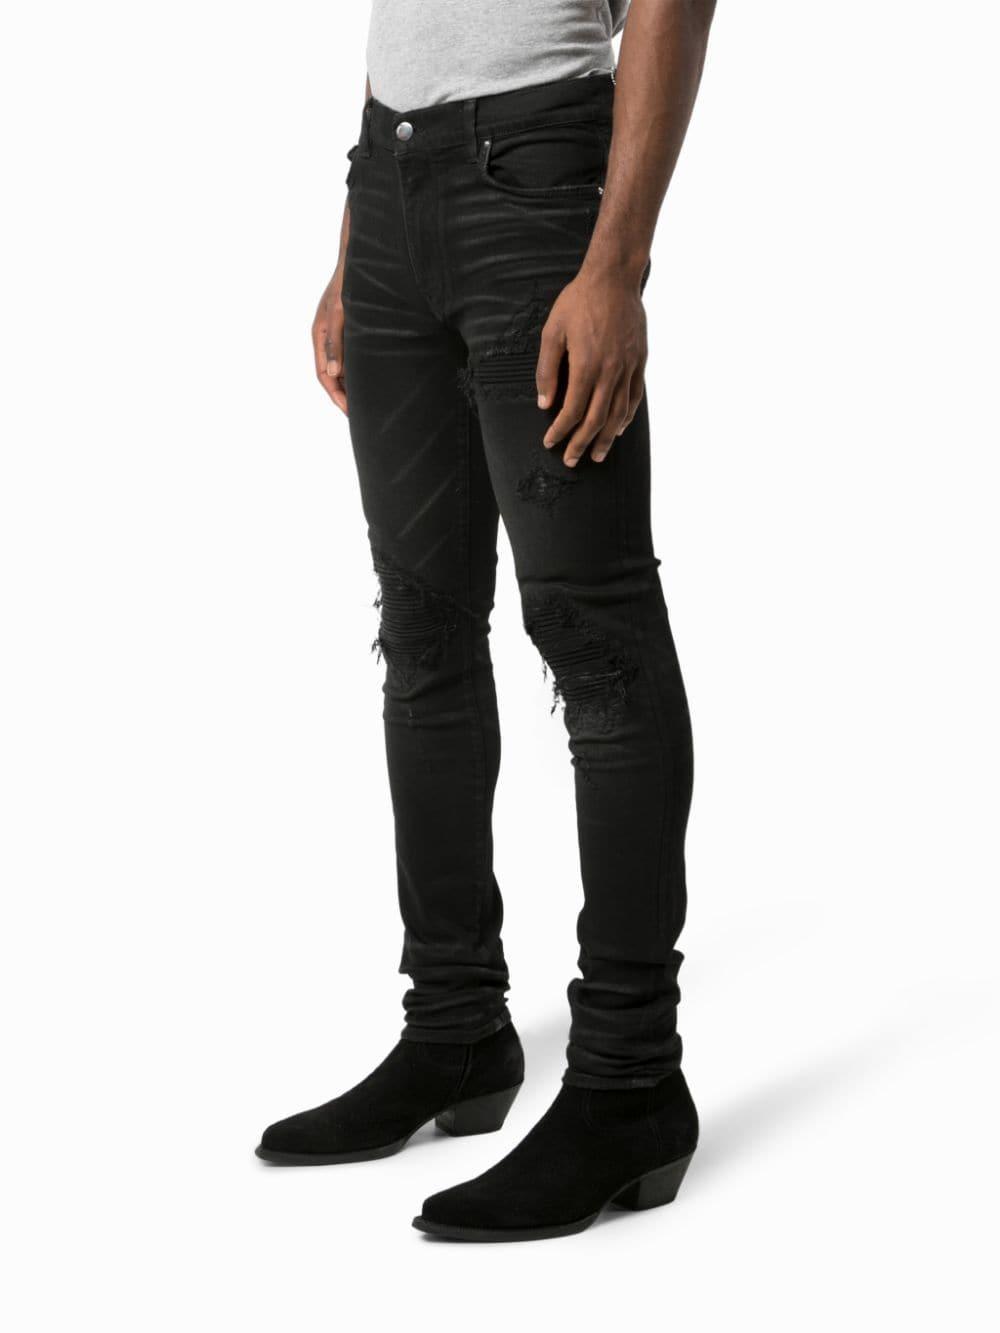 Amiri Denim Skinny Biker Jeans in Black for Men - Lyst